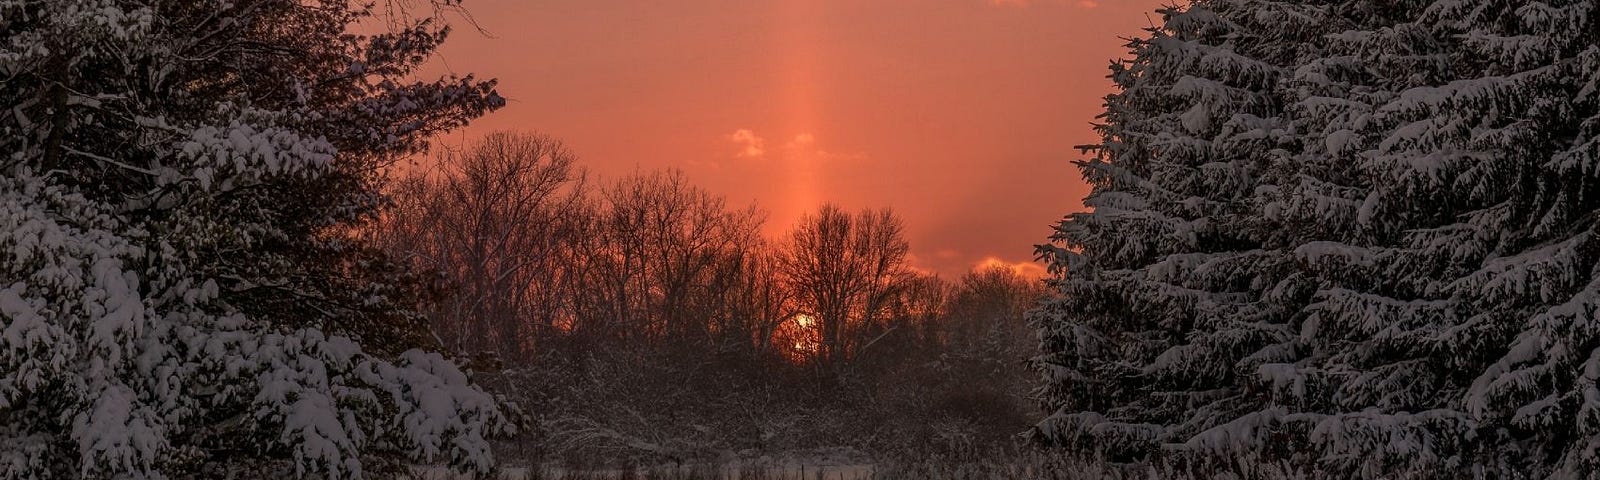 An orange sunrise through winter evergreen trees